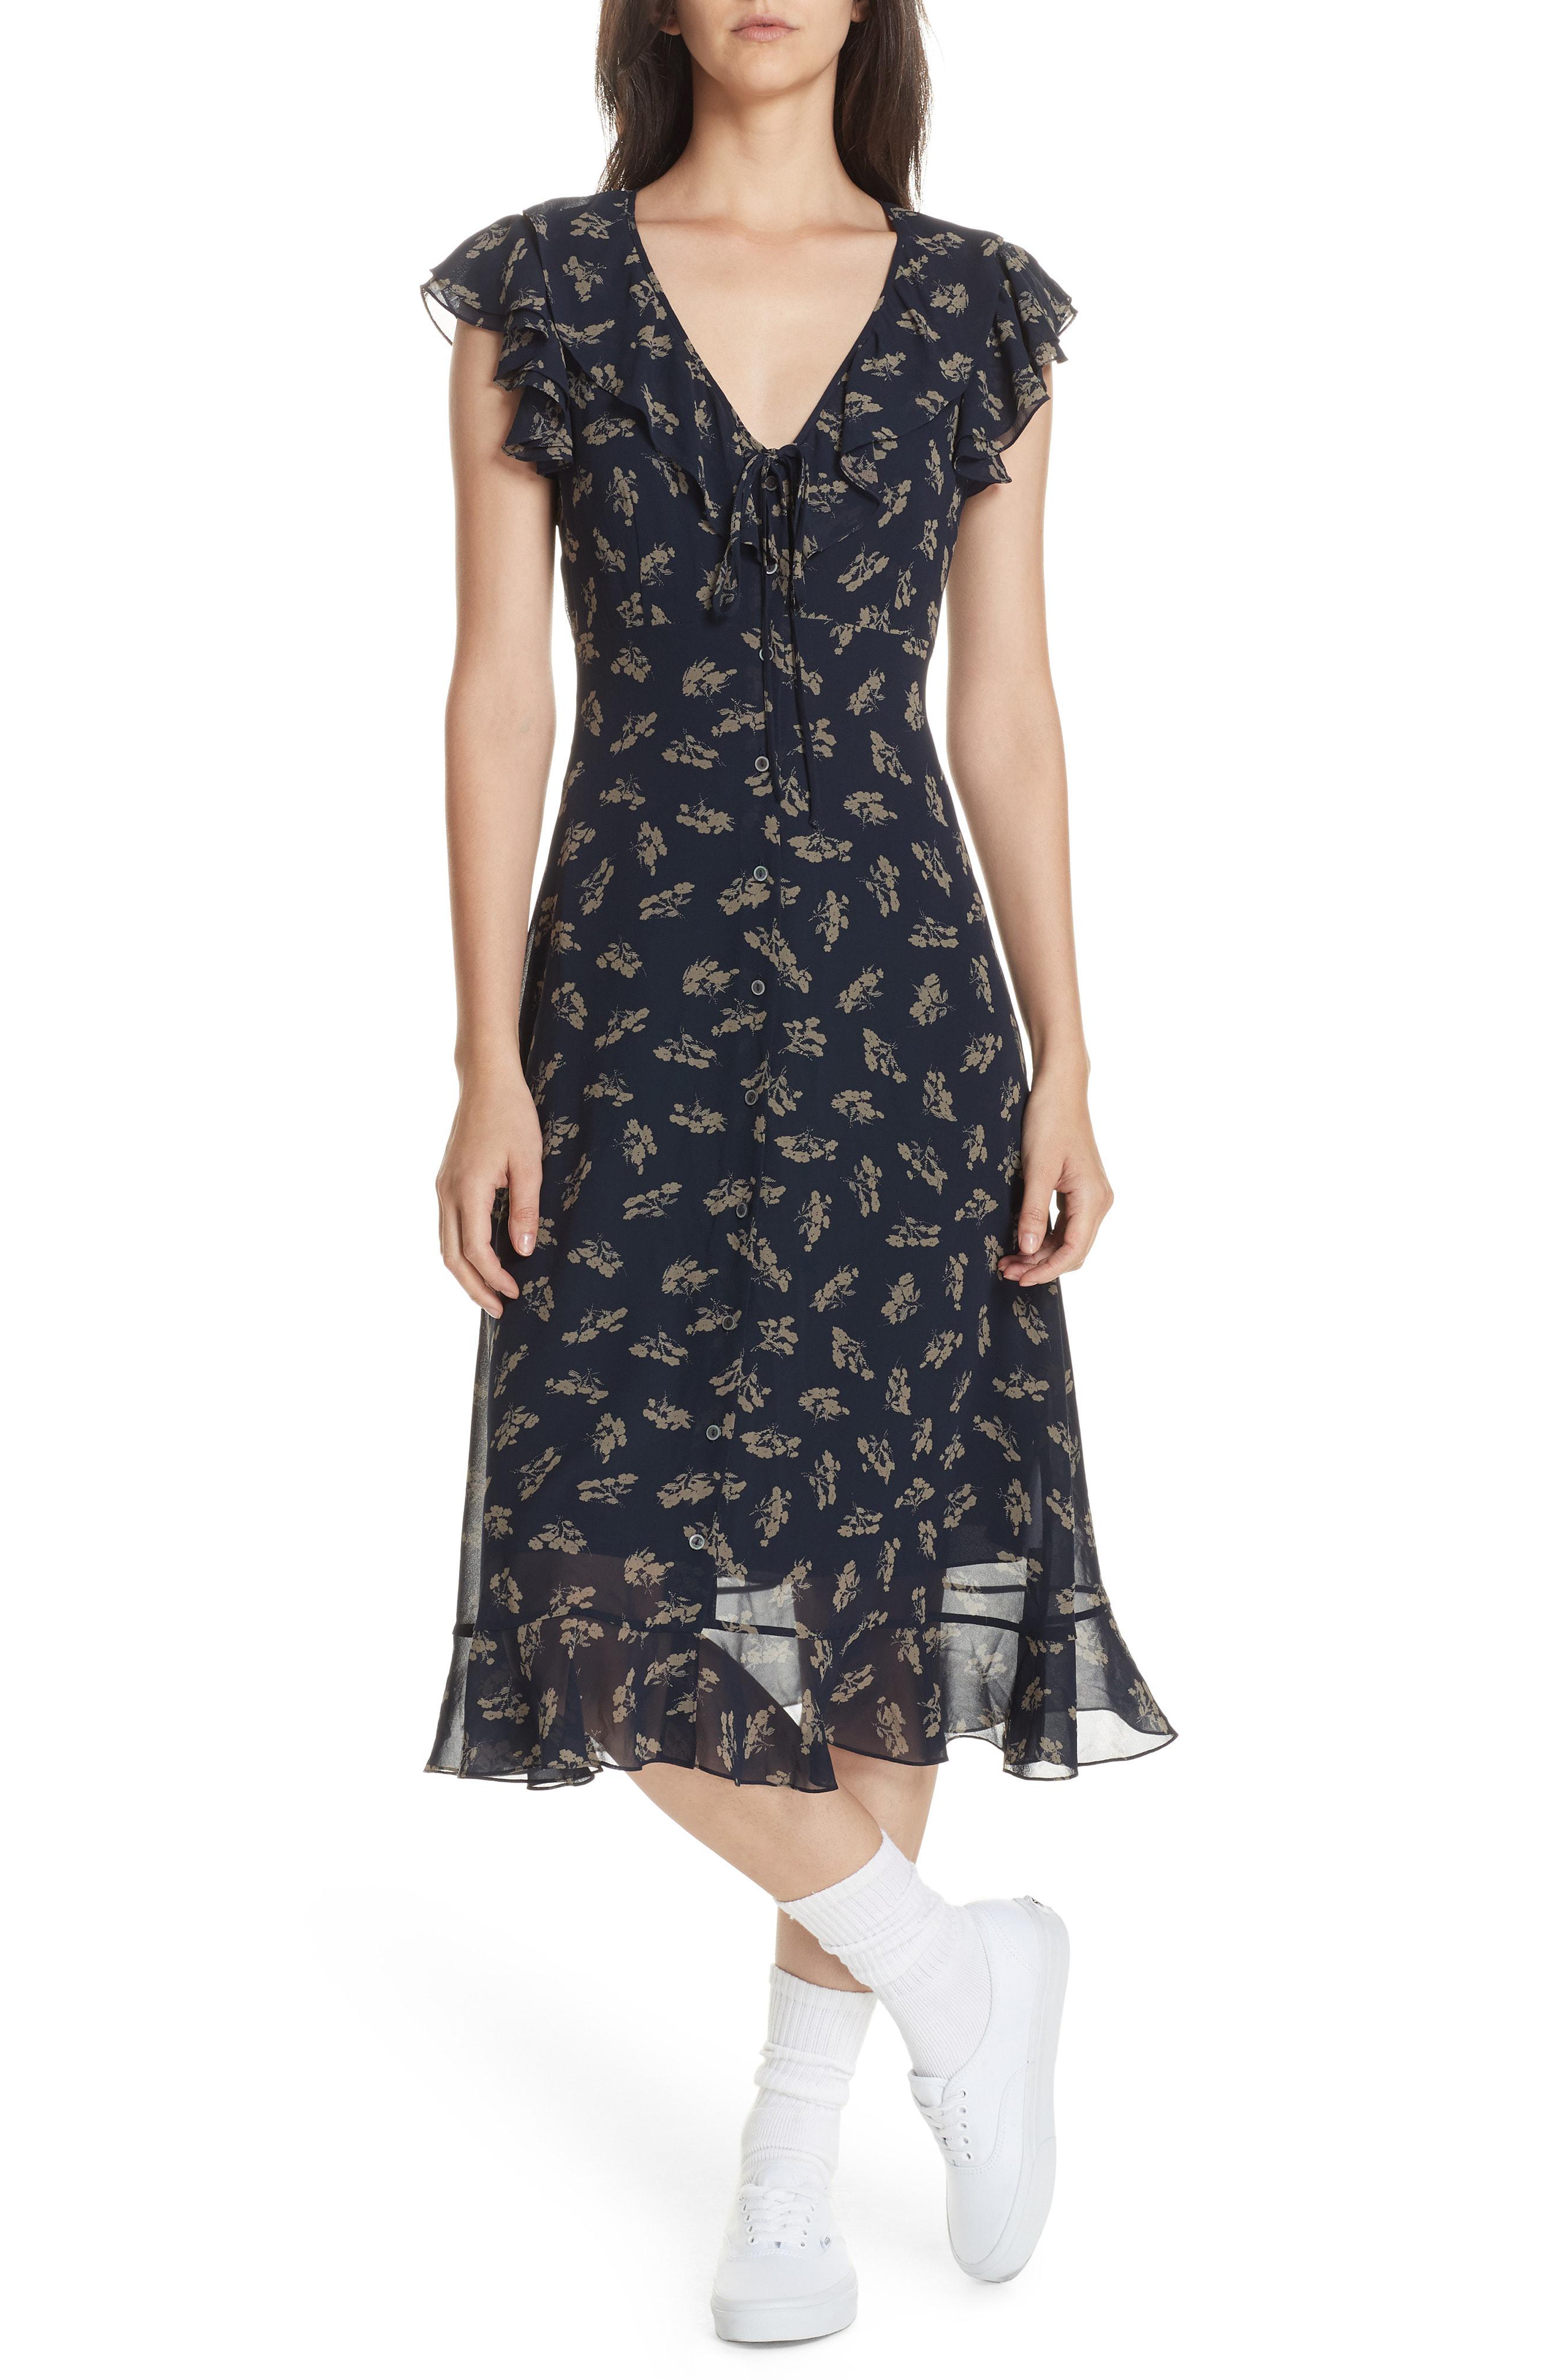 Polo Ralph Lauren Chiffon Ruffled Floral Midi Dress in Black - Lyst